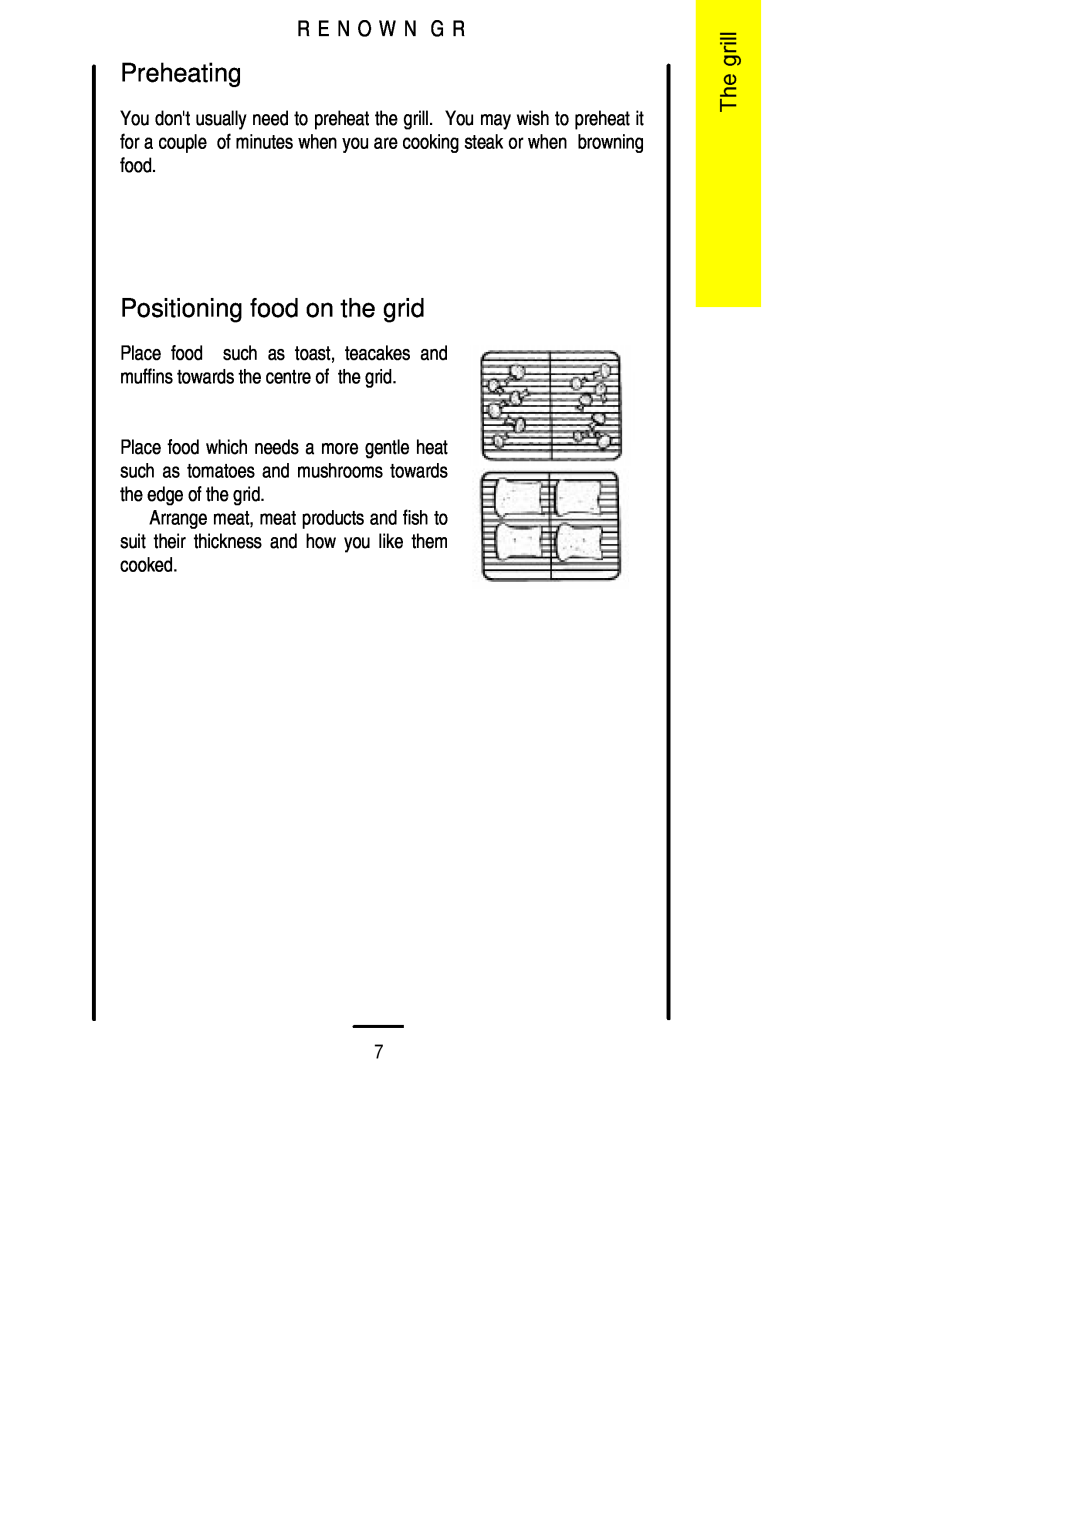 Parkinson Cowan Renown GR installation instructions Preheating, Positioning food on the grid, R E N O W N G R 